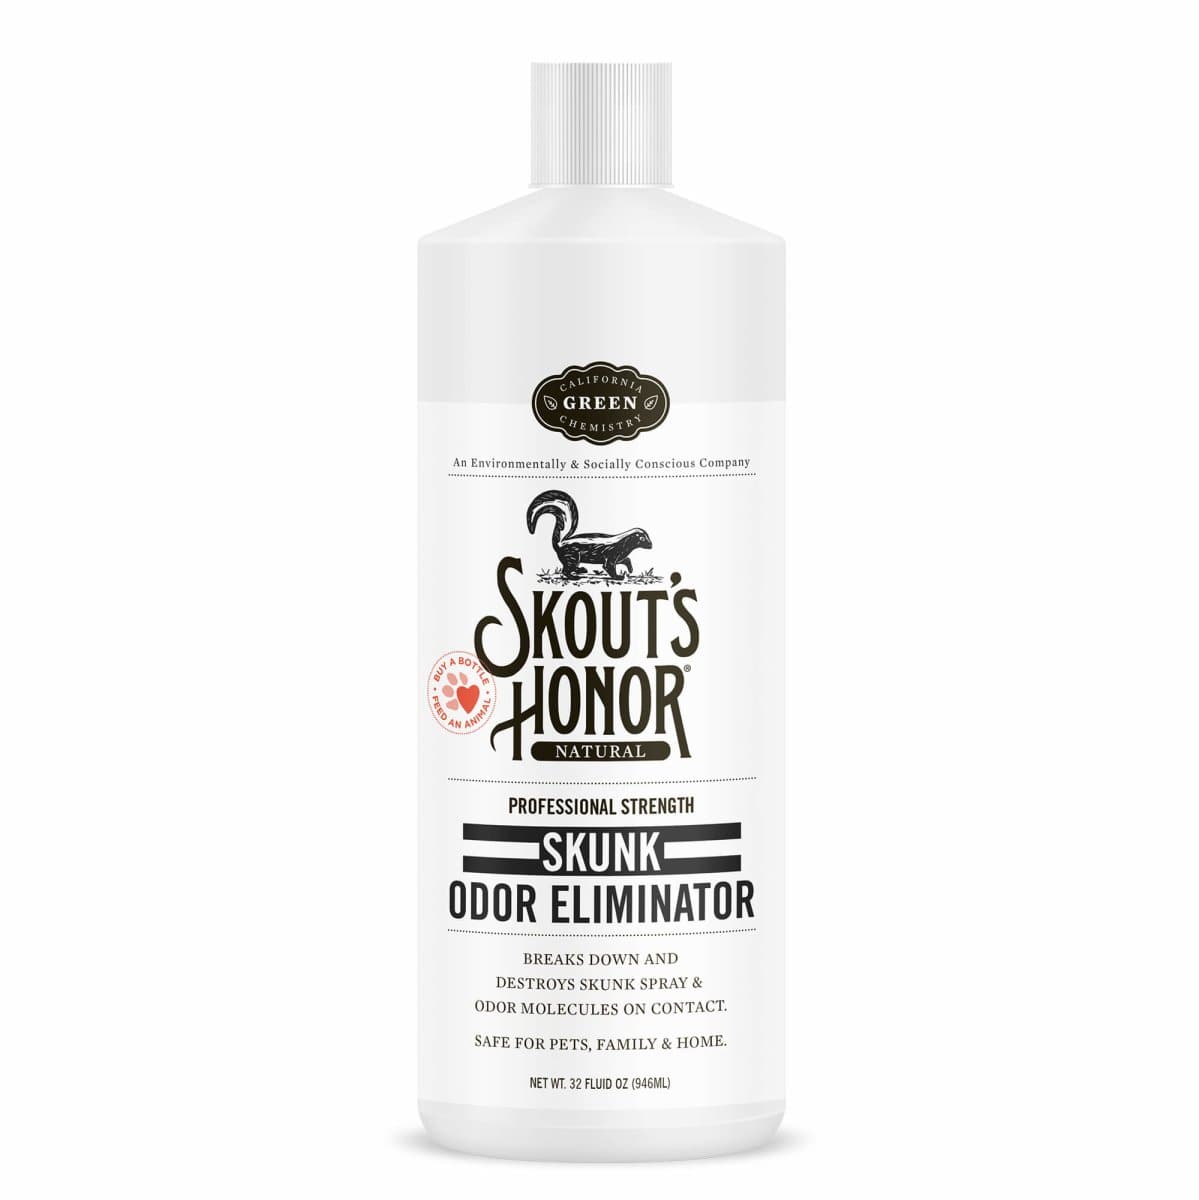 Skout's Honor - Skunk Odor Eliminator